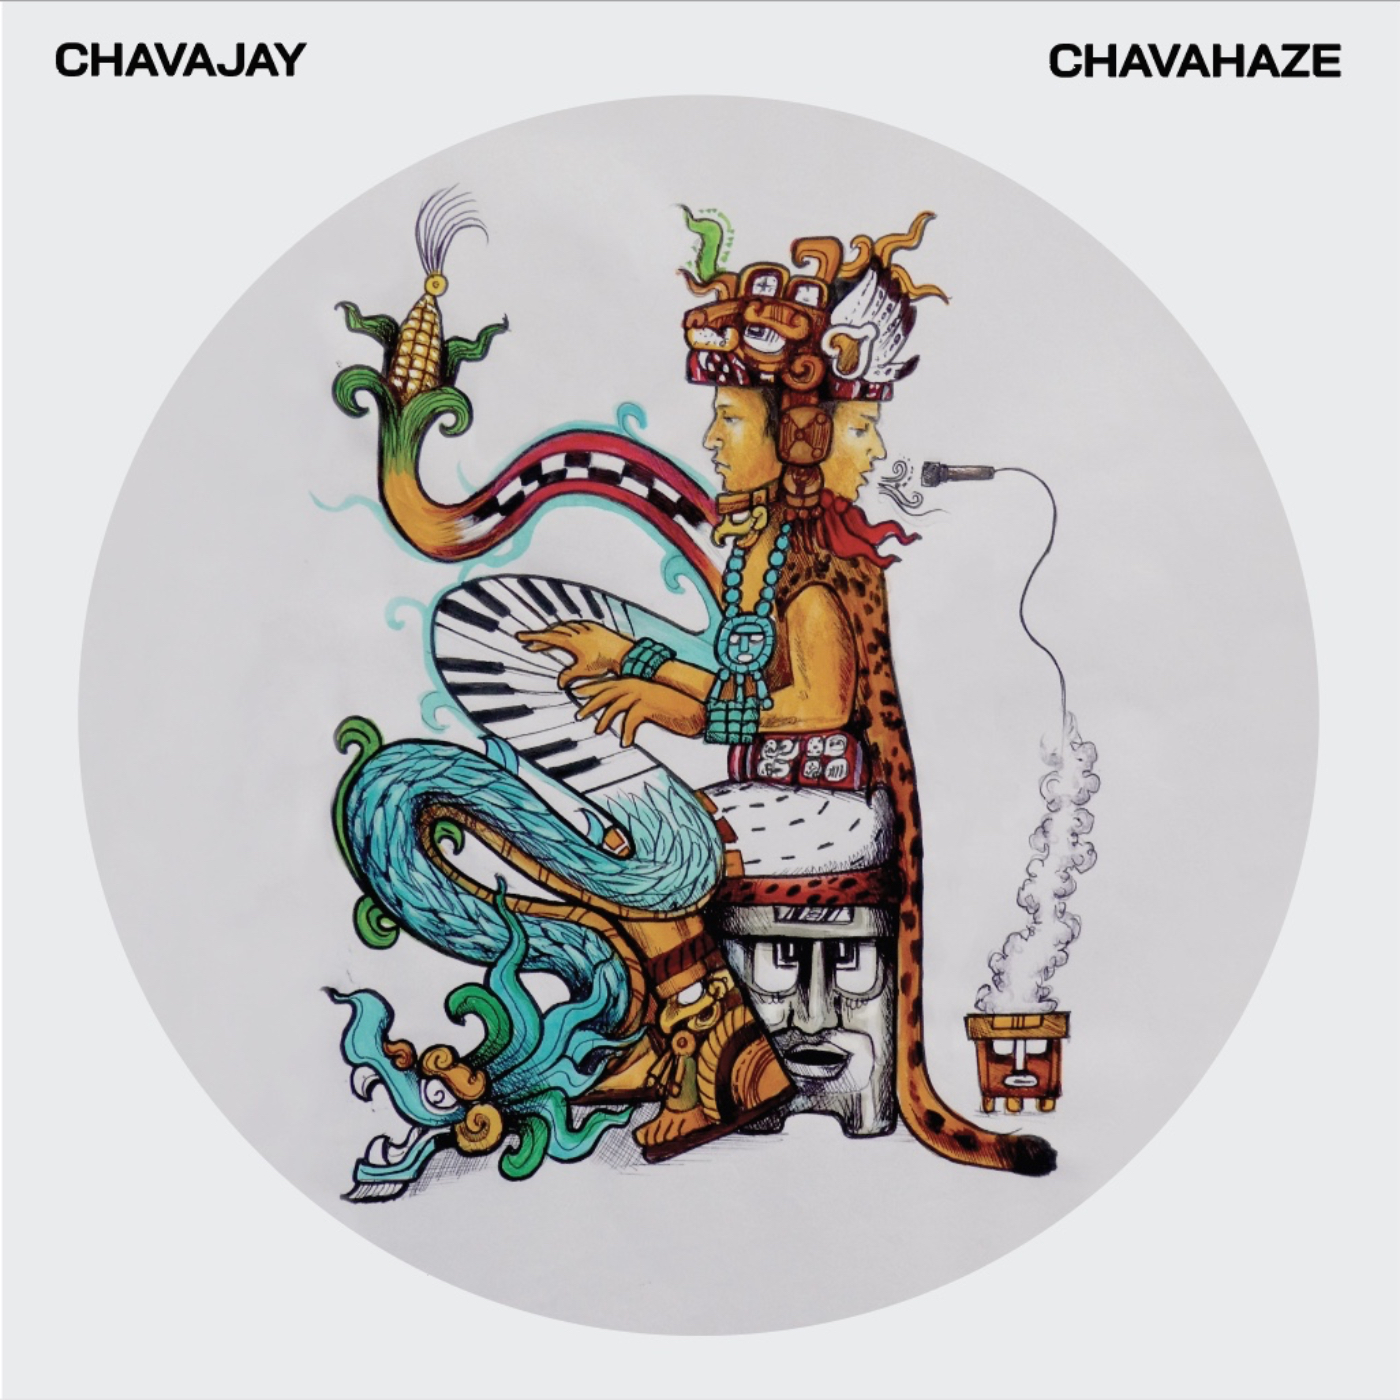 Chavahaze